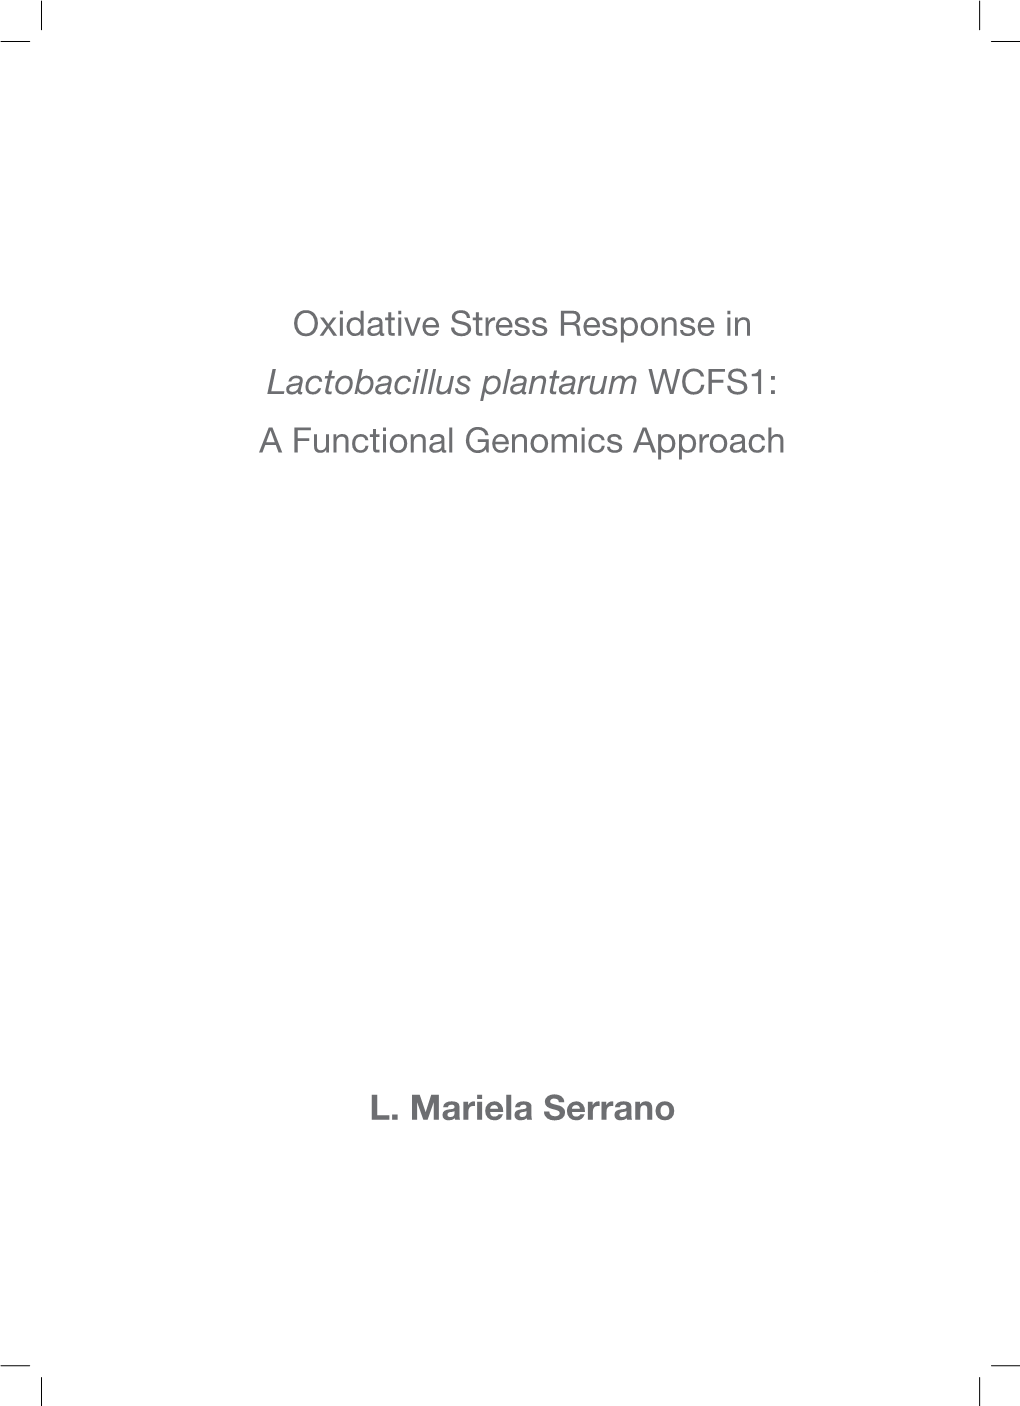 Oxidative Stress Response in Lactobacillus Plantarum WCFS1: a Functional Genomics Approach